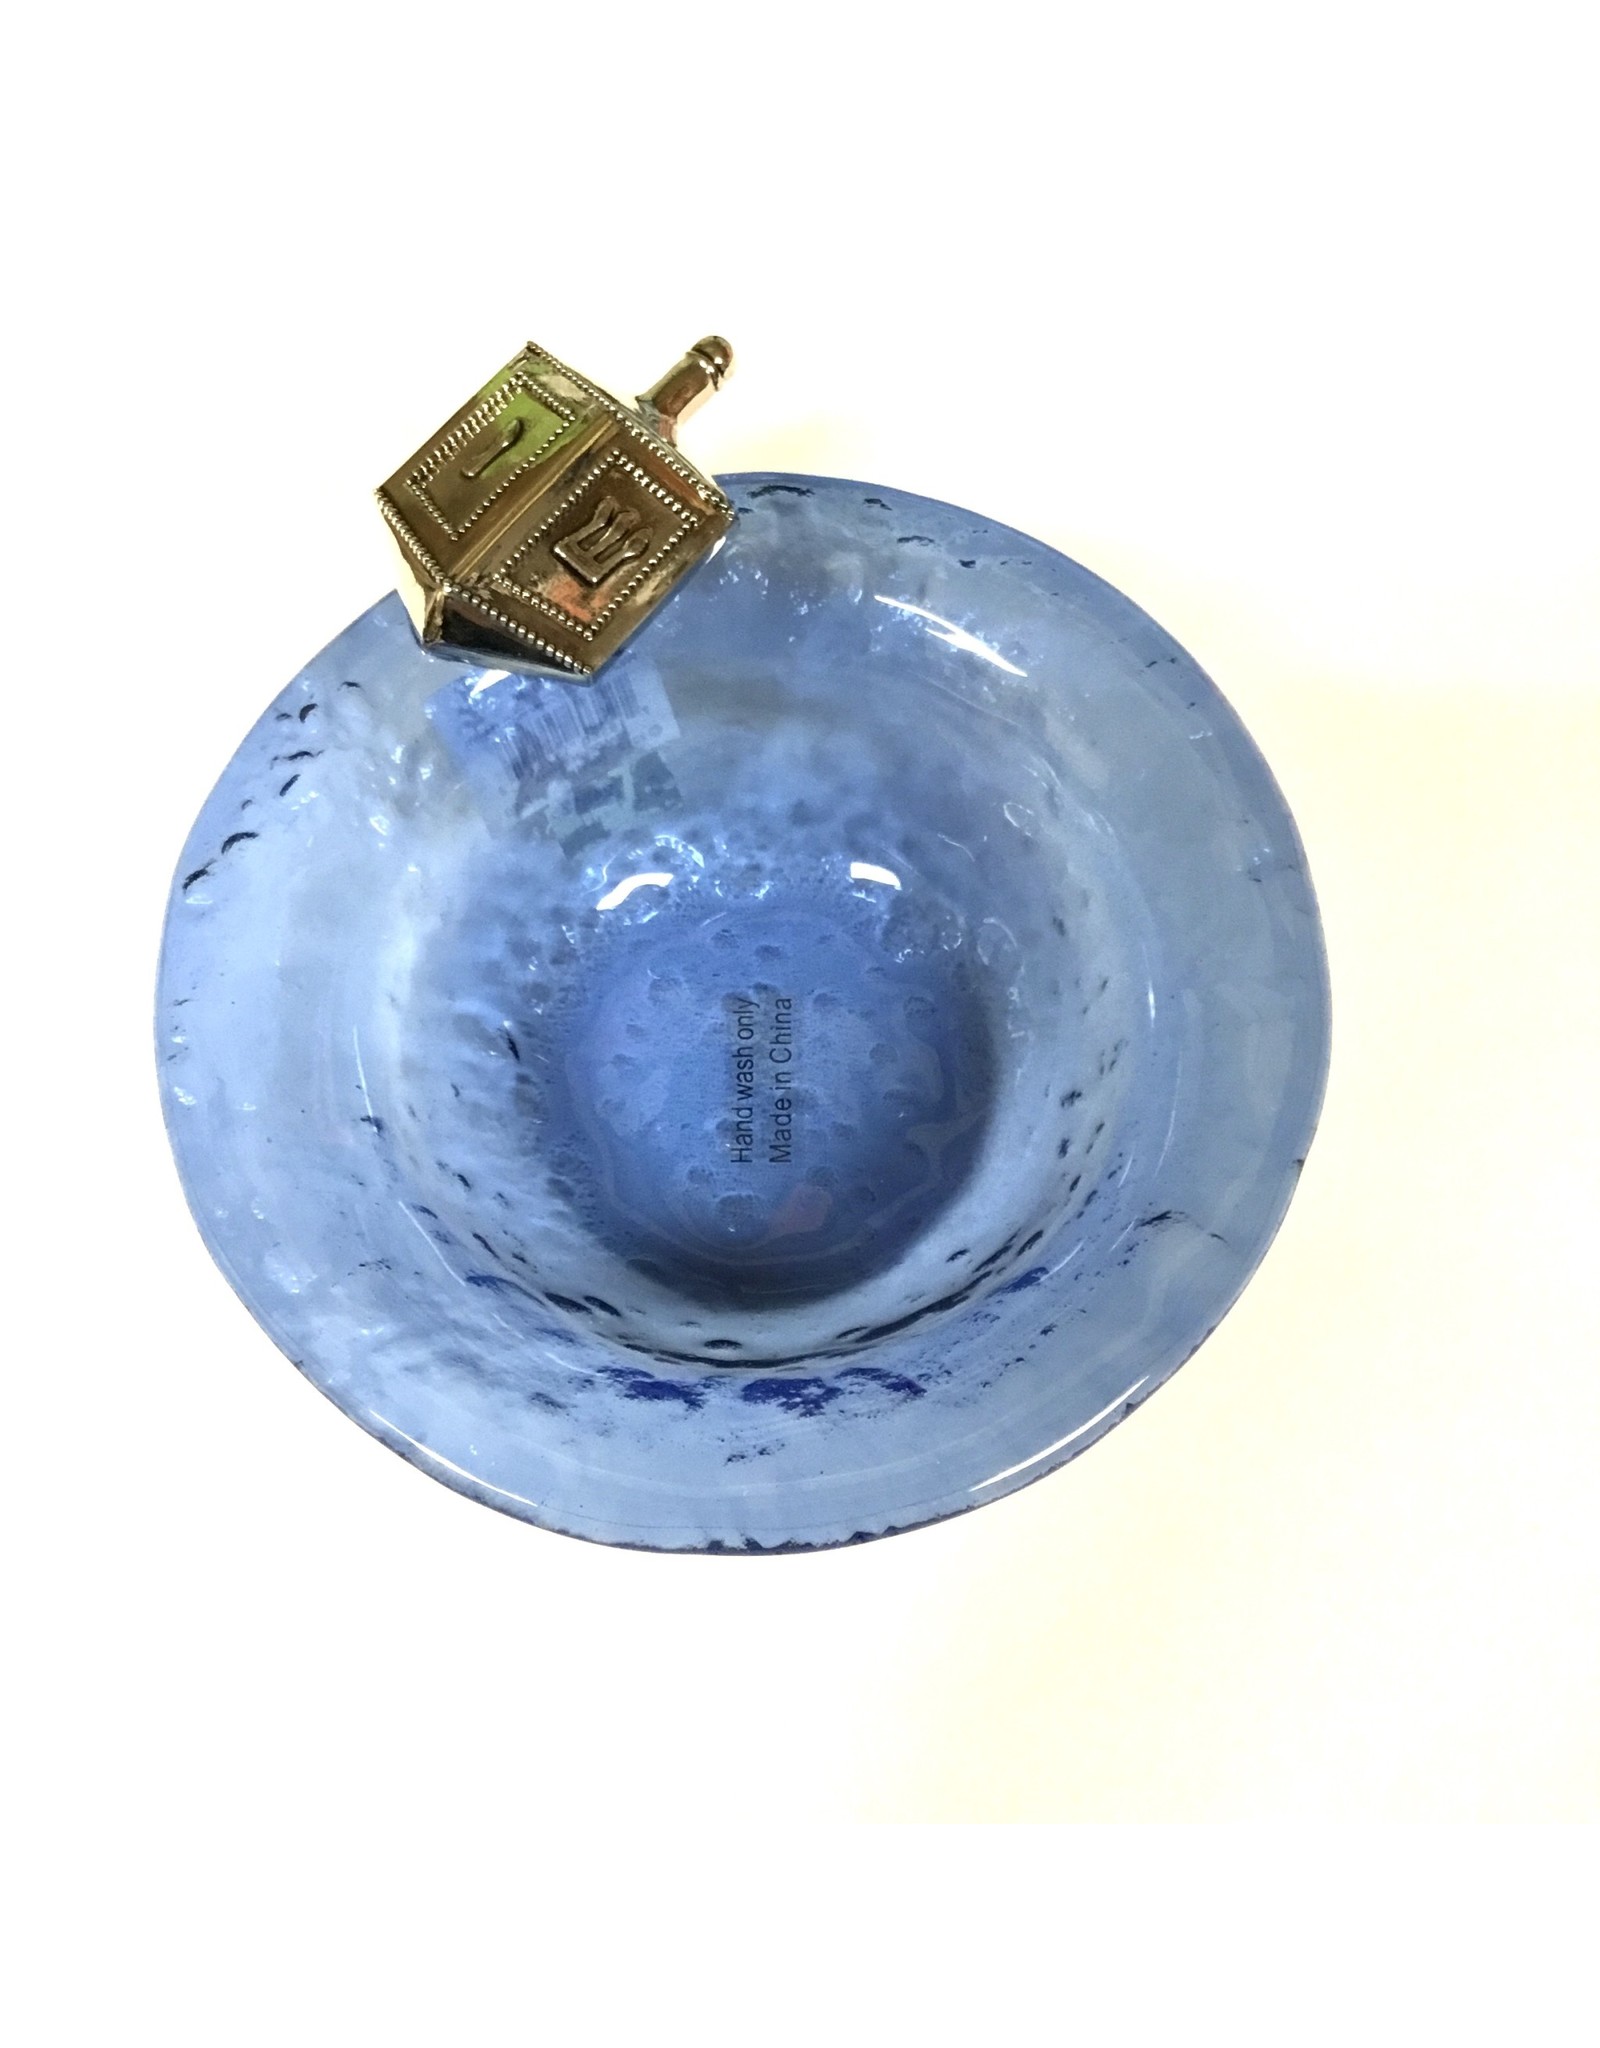 Mud Pie SALE Blue Glass Hanukah Bowl by MudPie